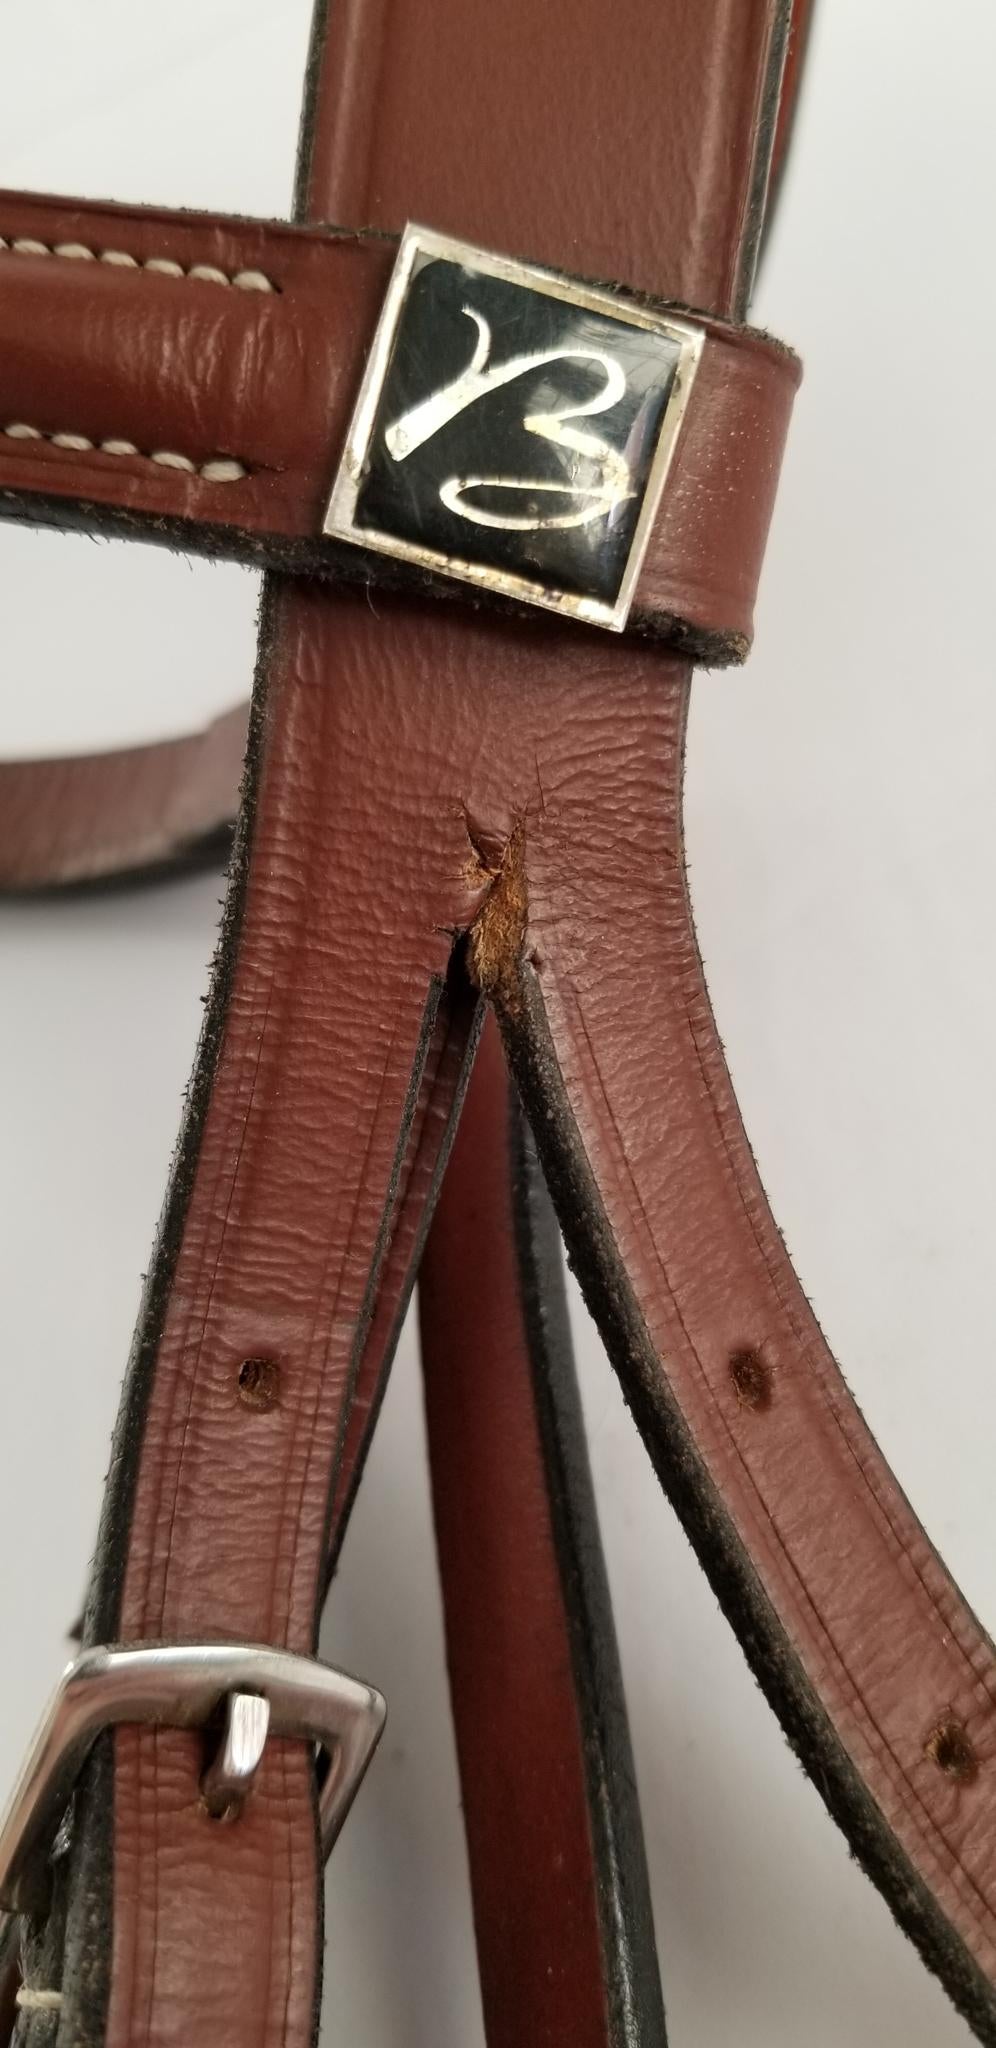 Fancy Stitched Leather Hunter Bridle w/ Reins - Chestnut - Cob